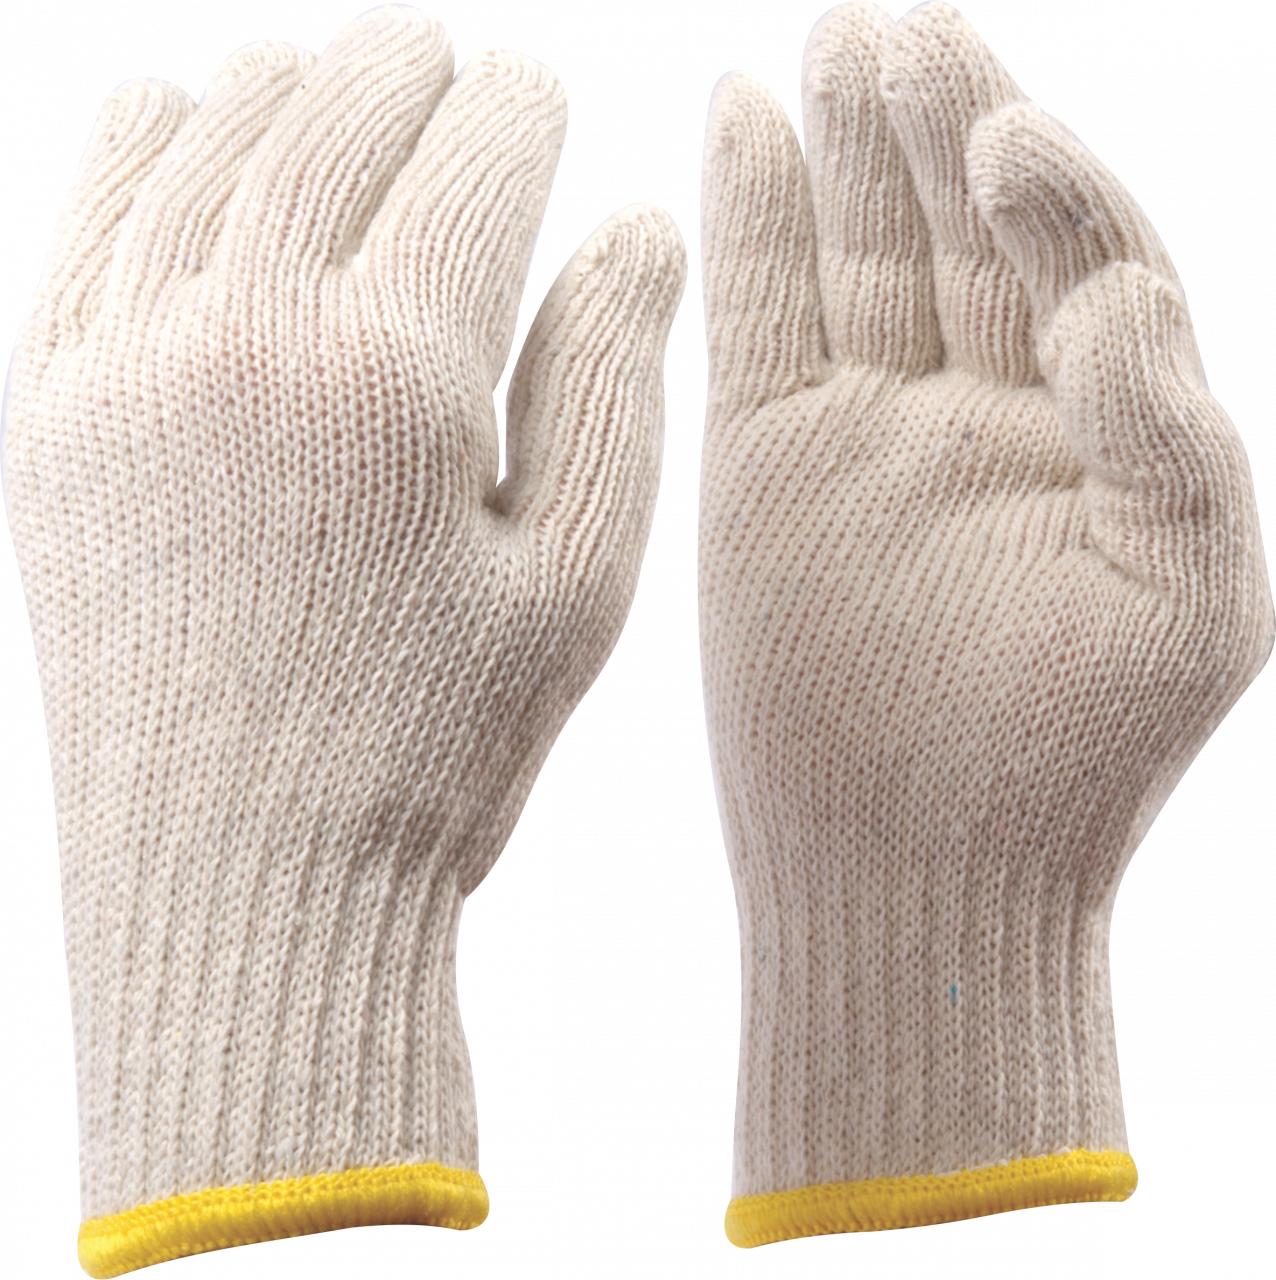 Cotton Protective Gloves Un-Bleached Taiwan Crochet Liner